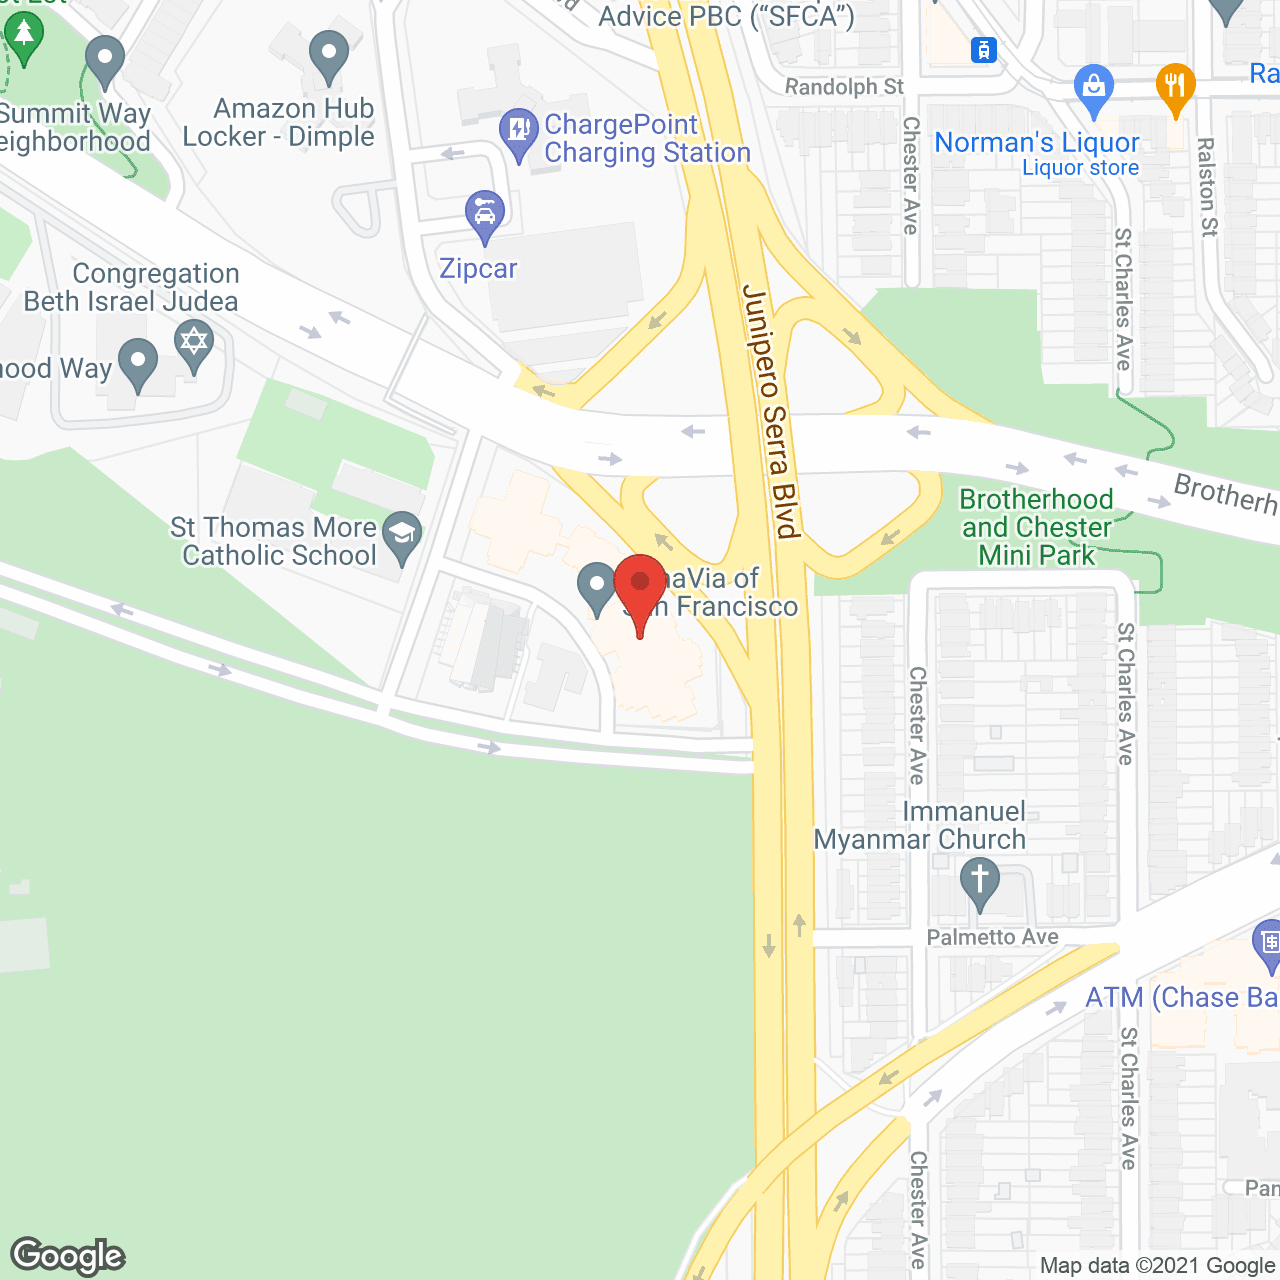 AlmaVia of San Francisco in google map